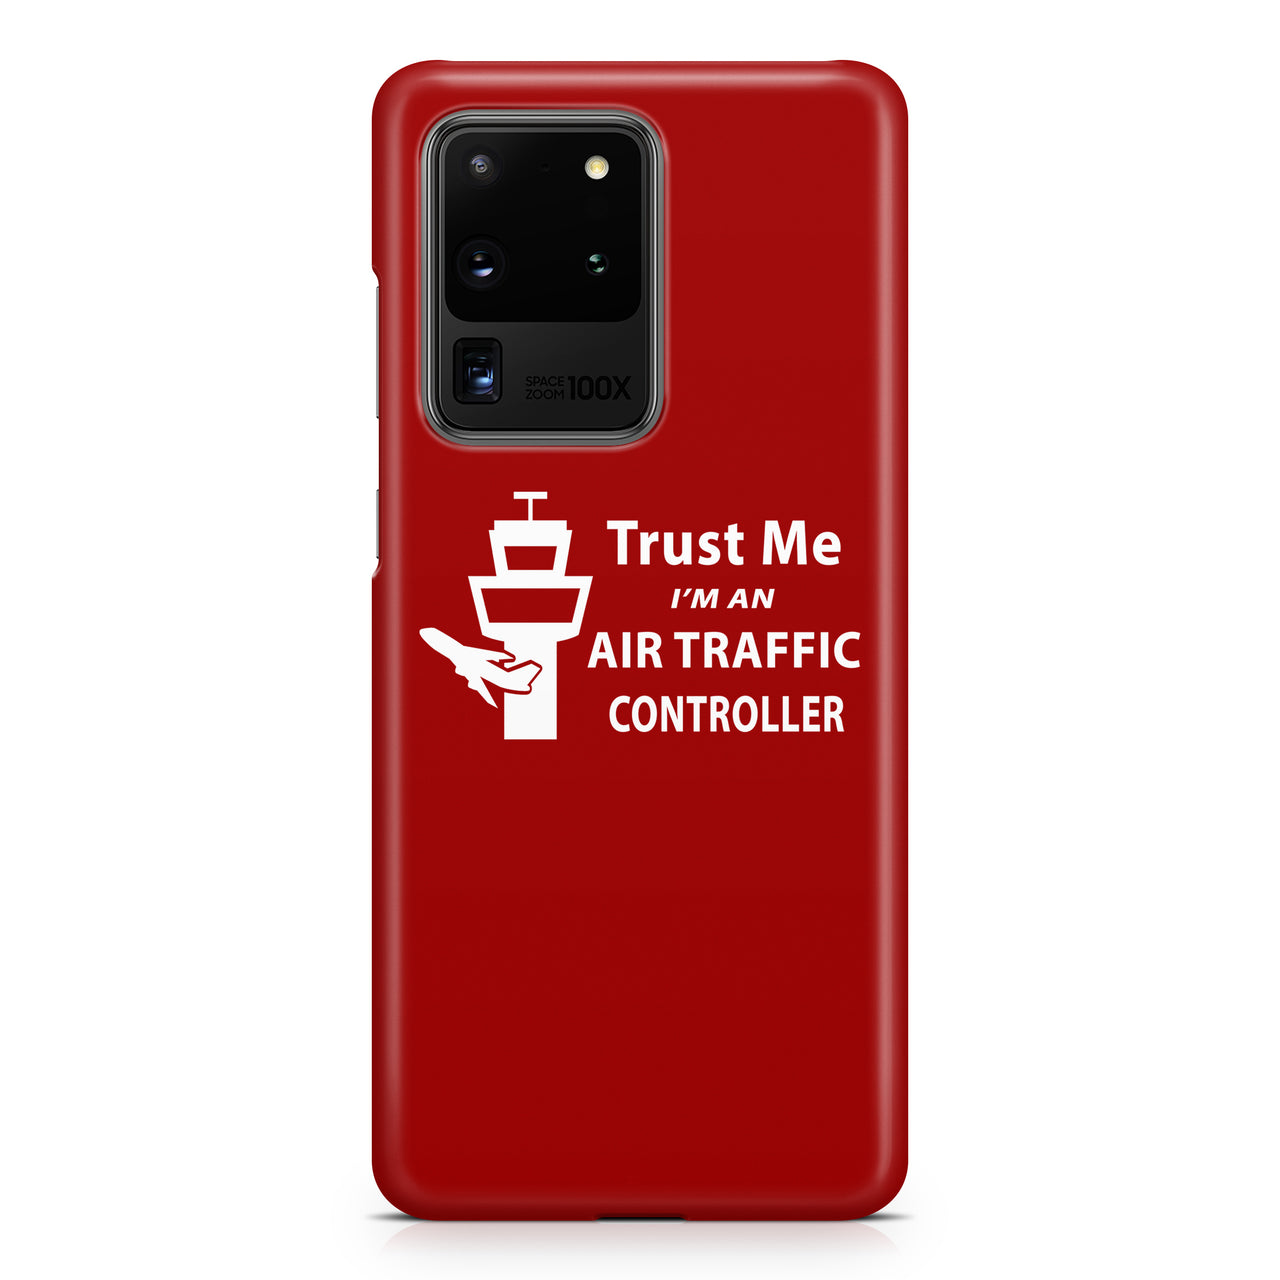 Trust Me I'm an Air Traffic Controller Samsung A Cases